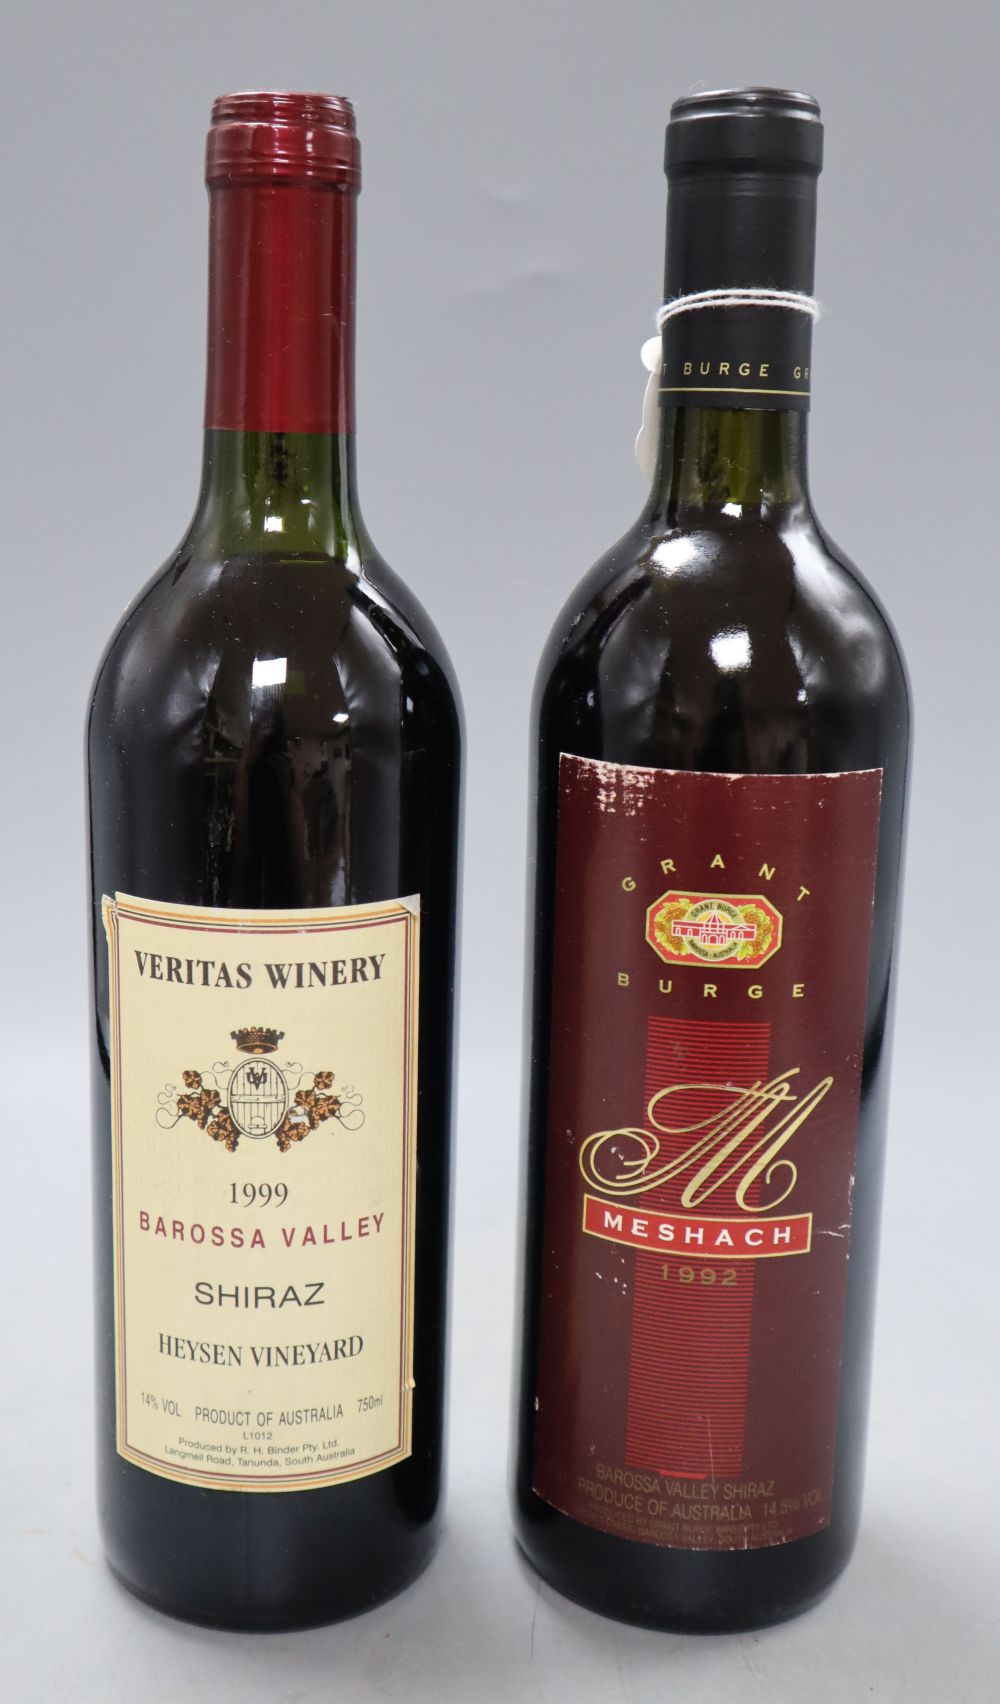 Grant Burge Meshach Shiraz-Barossa Valley, 75cl, 1992 and Veritas Winery Heyson Vineyard Shiraz-Barossa Valley, 75cl, 1999